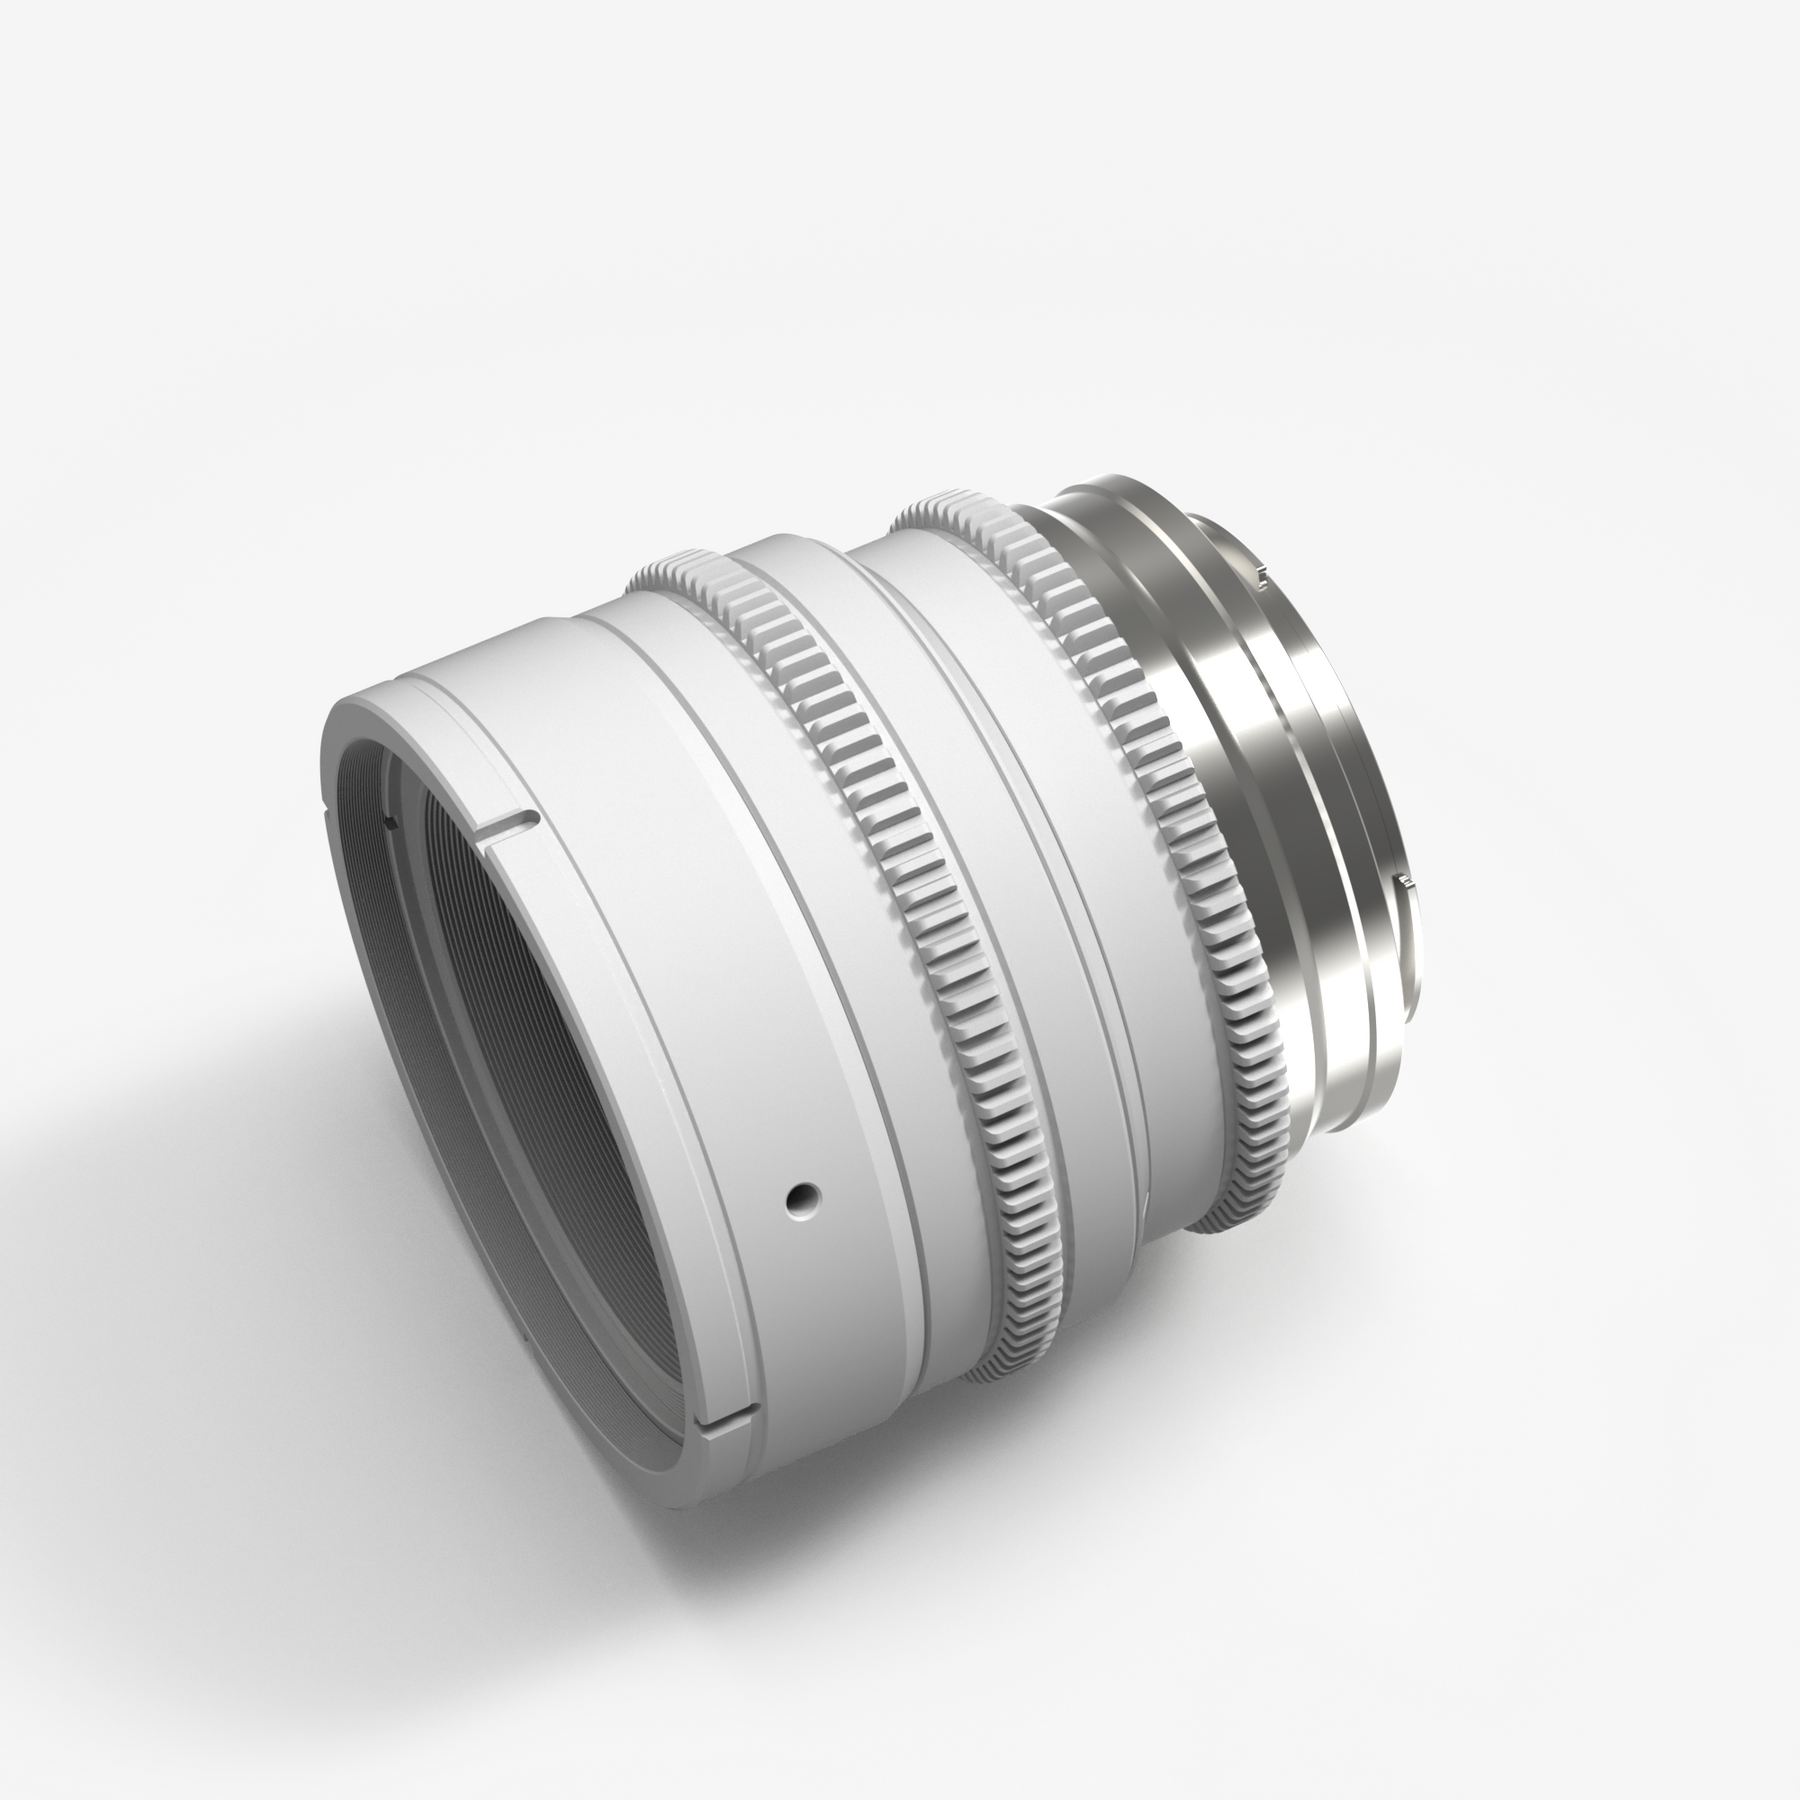 Dulens 31mm EF-Mount Kit for APO MINI Prime 31mm Lens